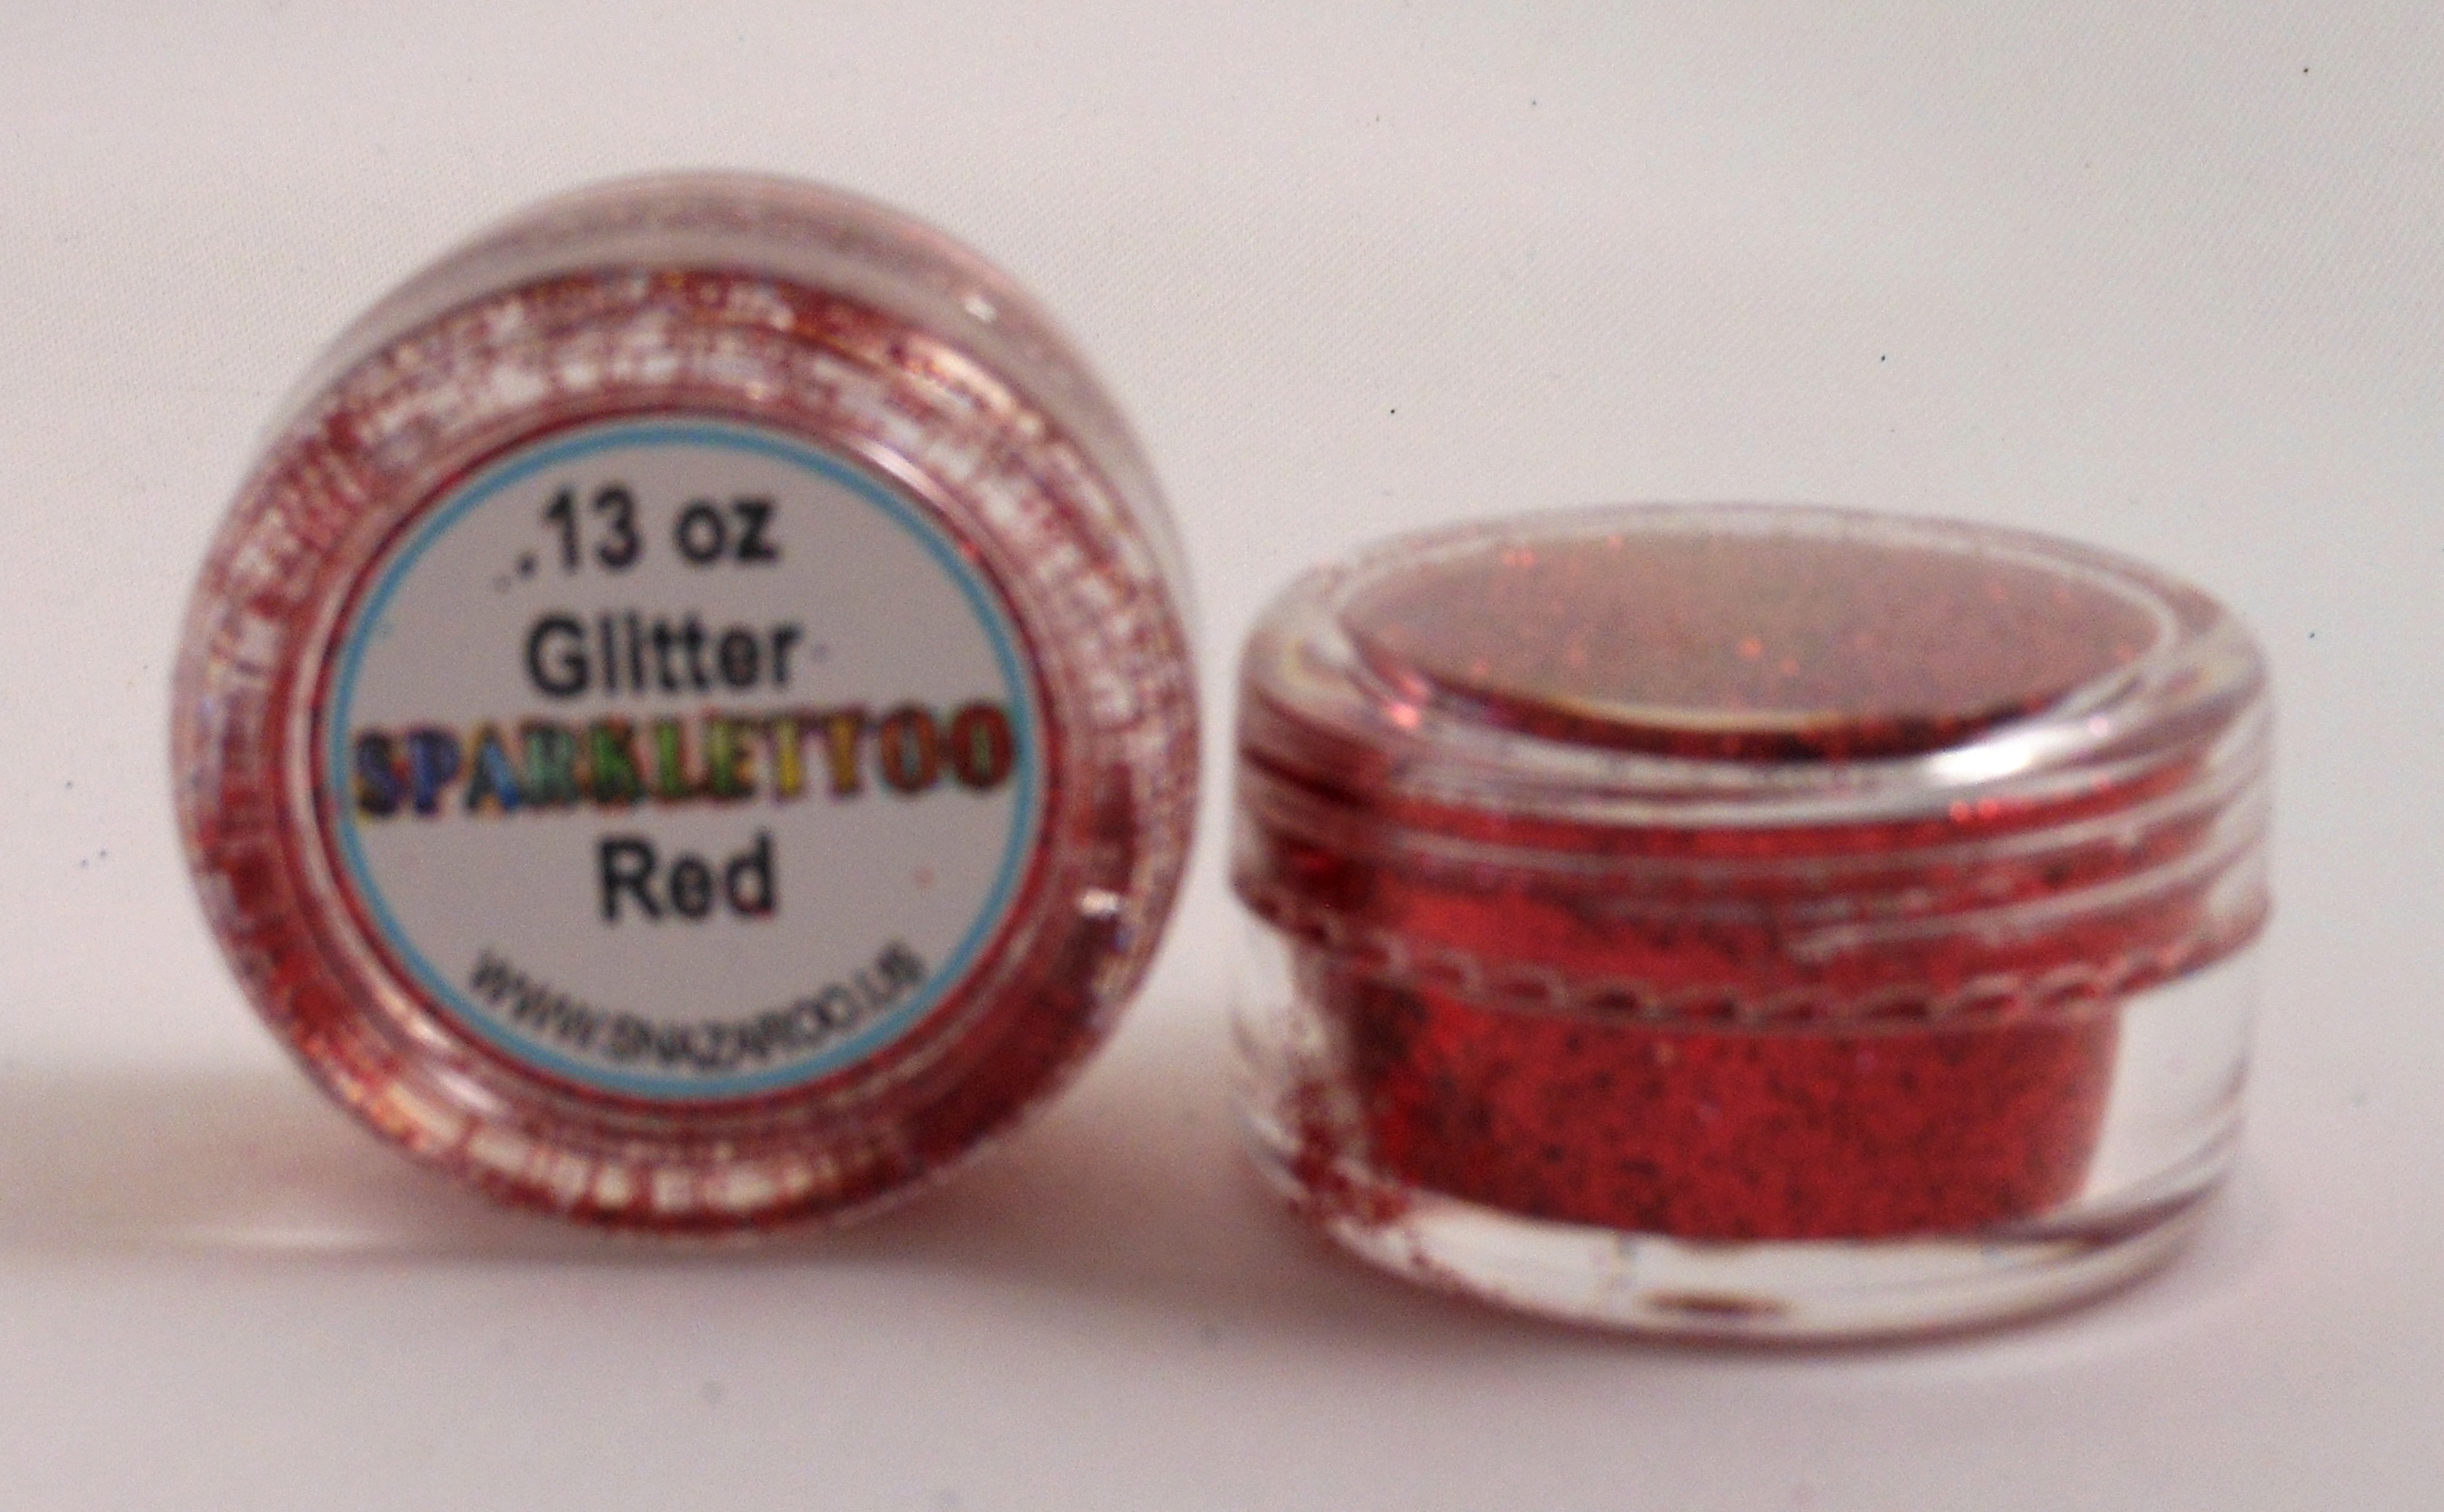 Glitter Red .13 oz. 